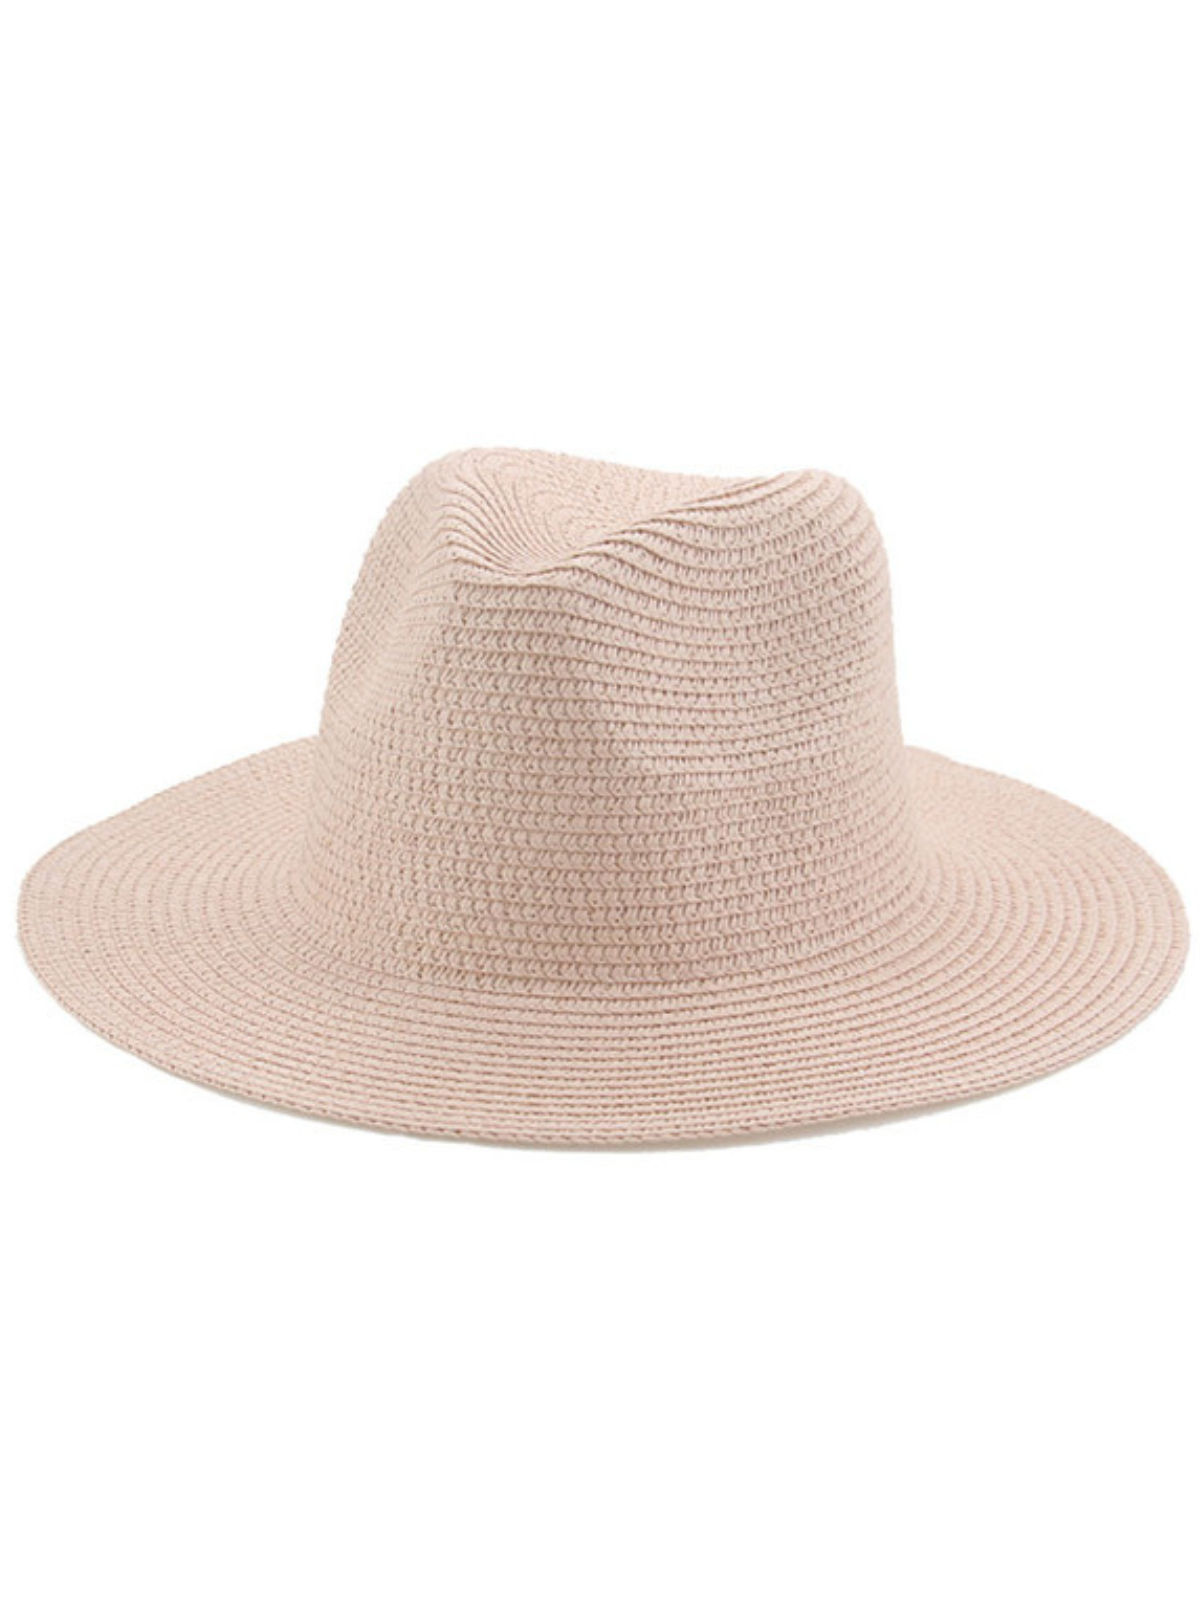 Not Your Basic Light Pink Sun Hat